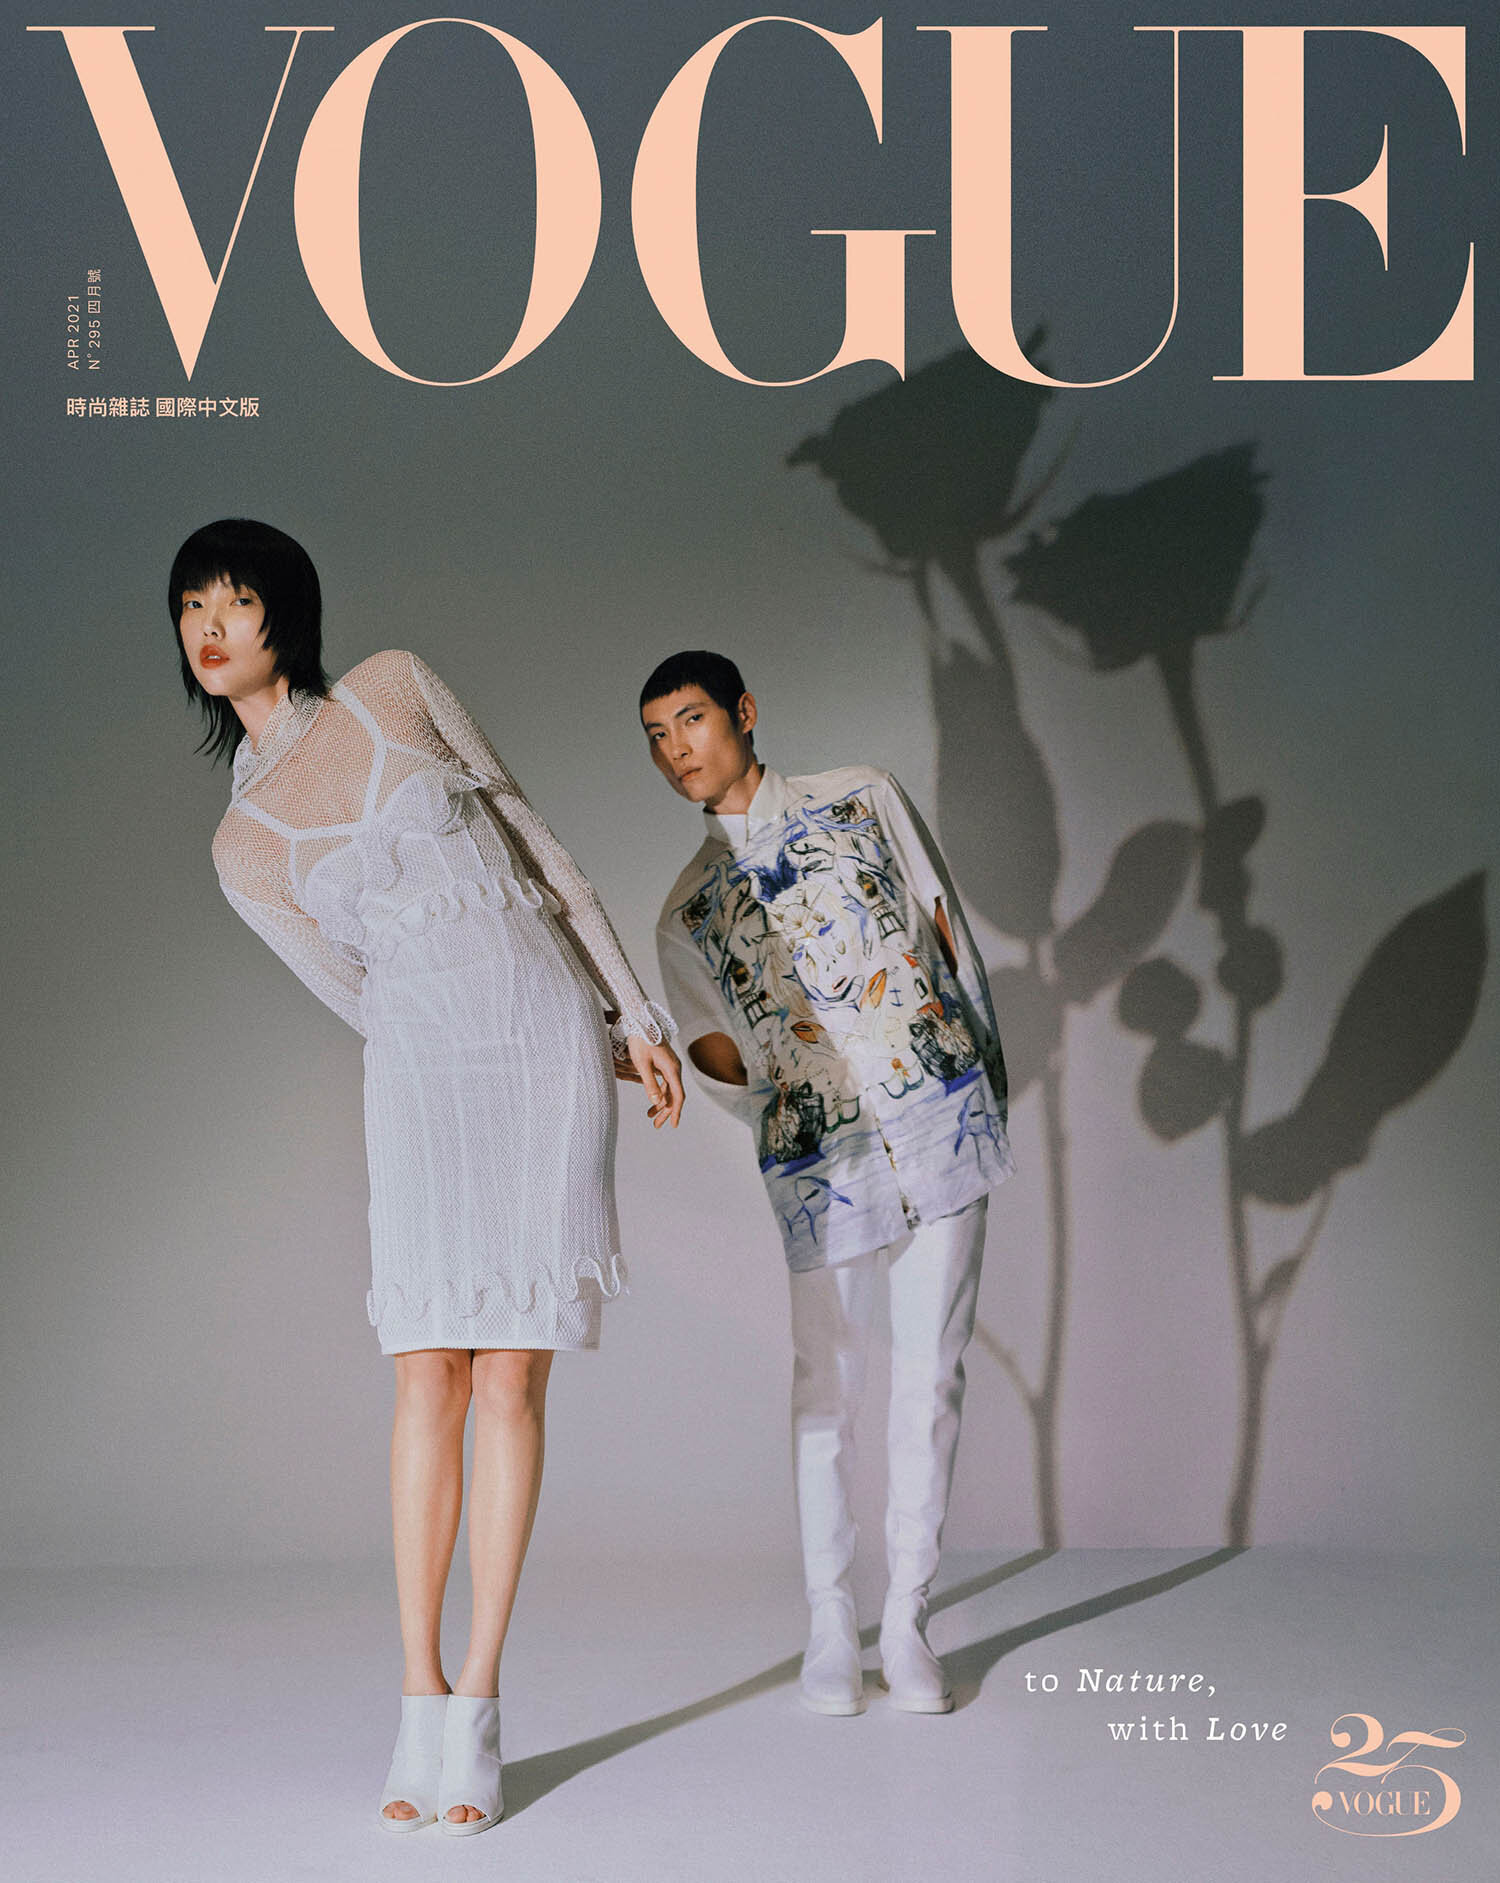 Zhong Lin for Vogue Taiwan April 2021 (3).jpg